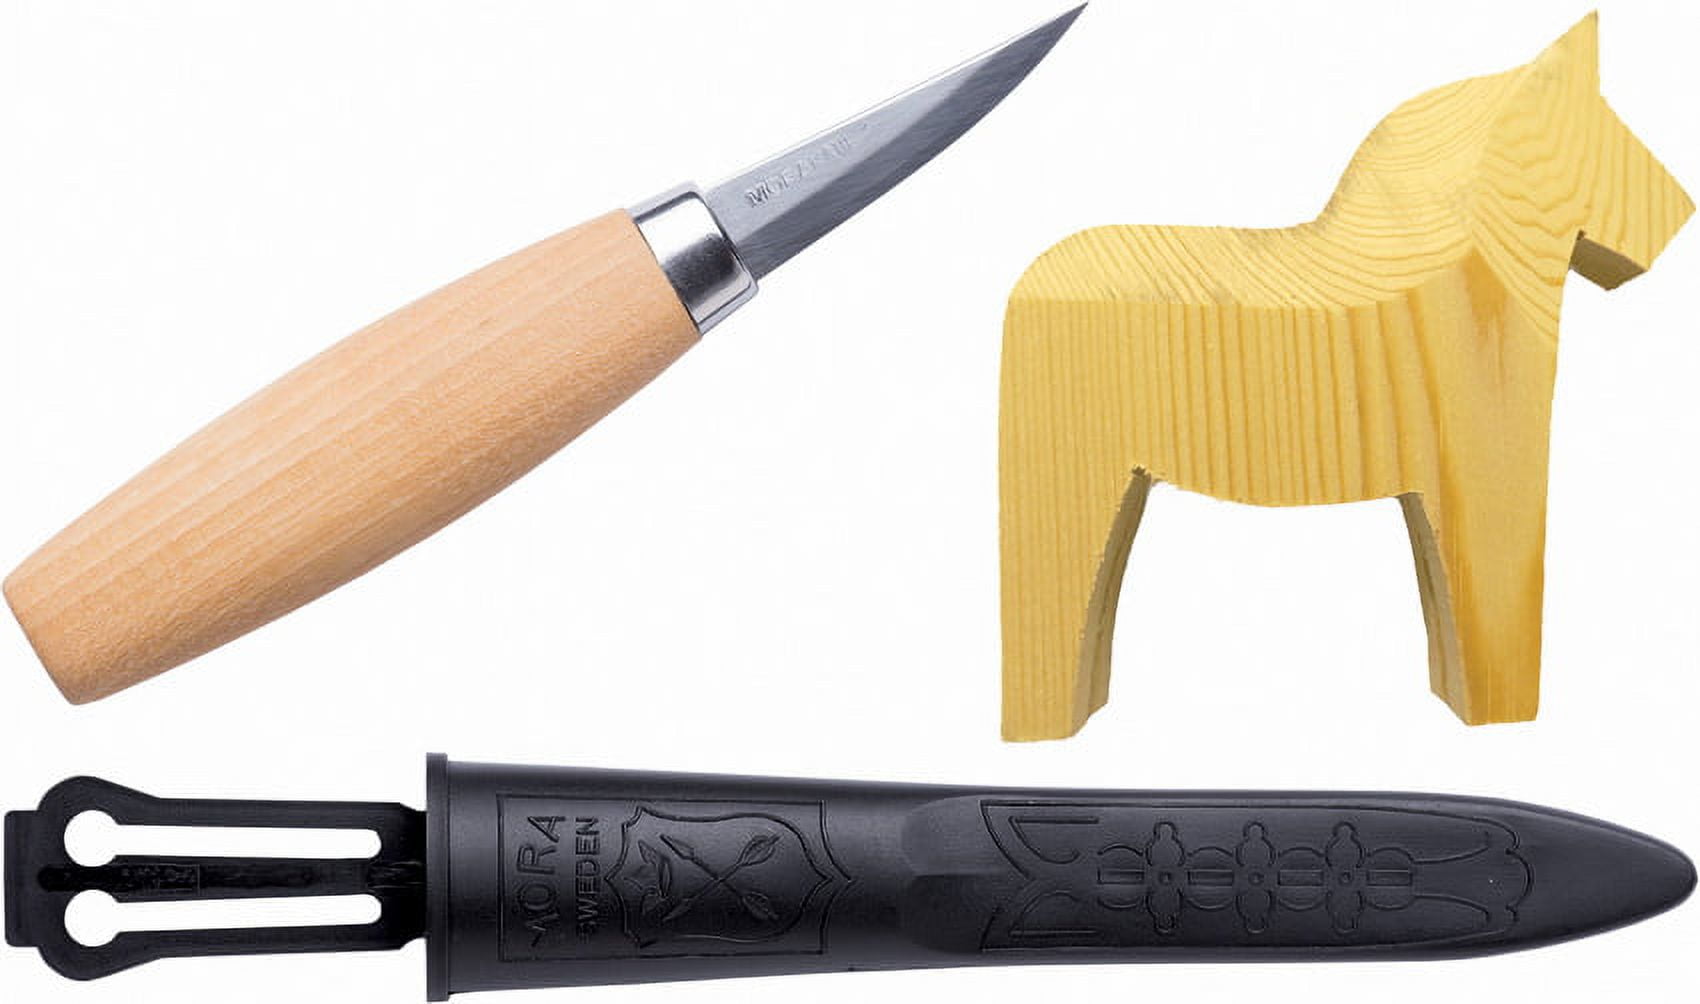 Morakniv Carving Knife Kit with Dala Horse